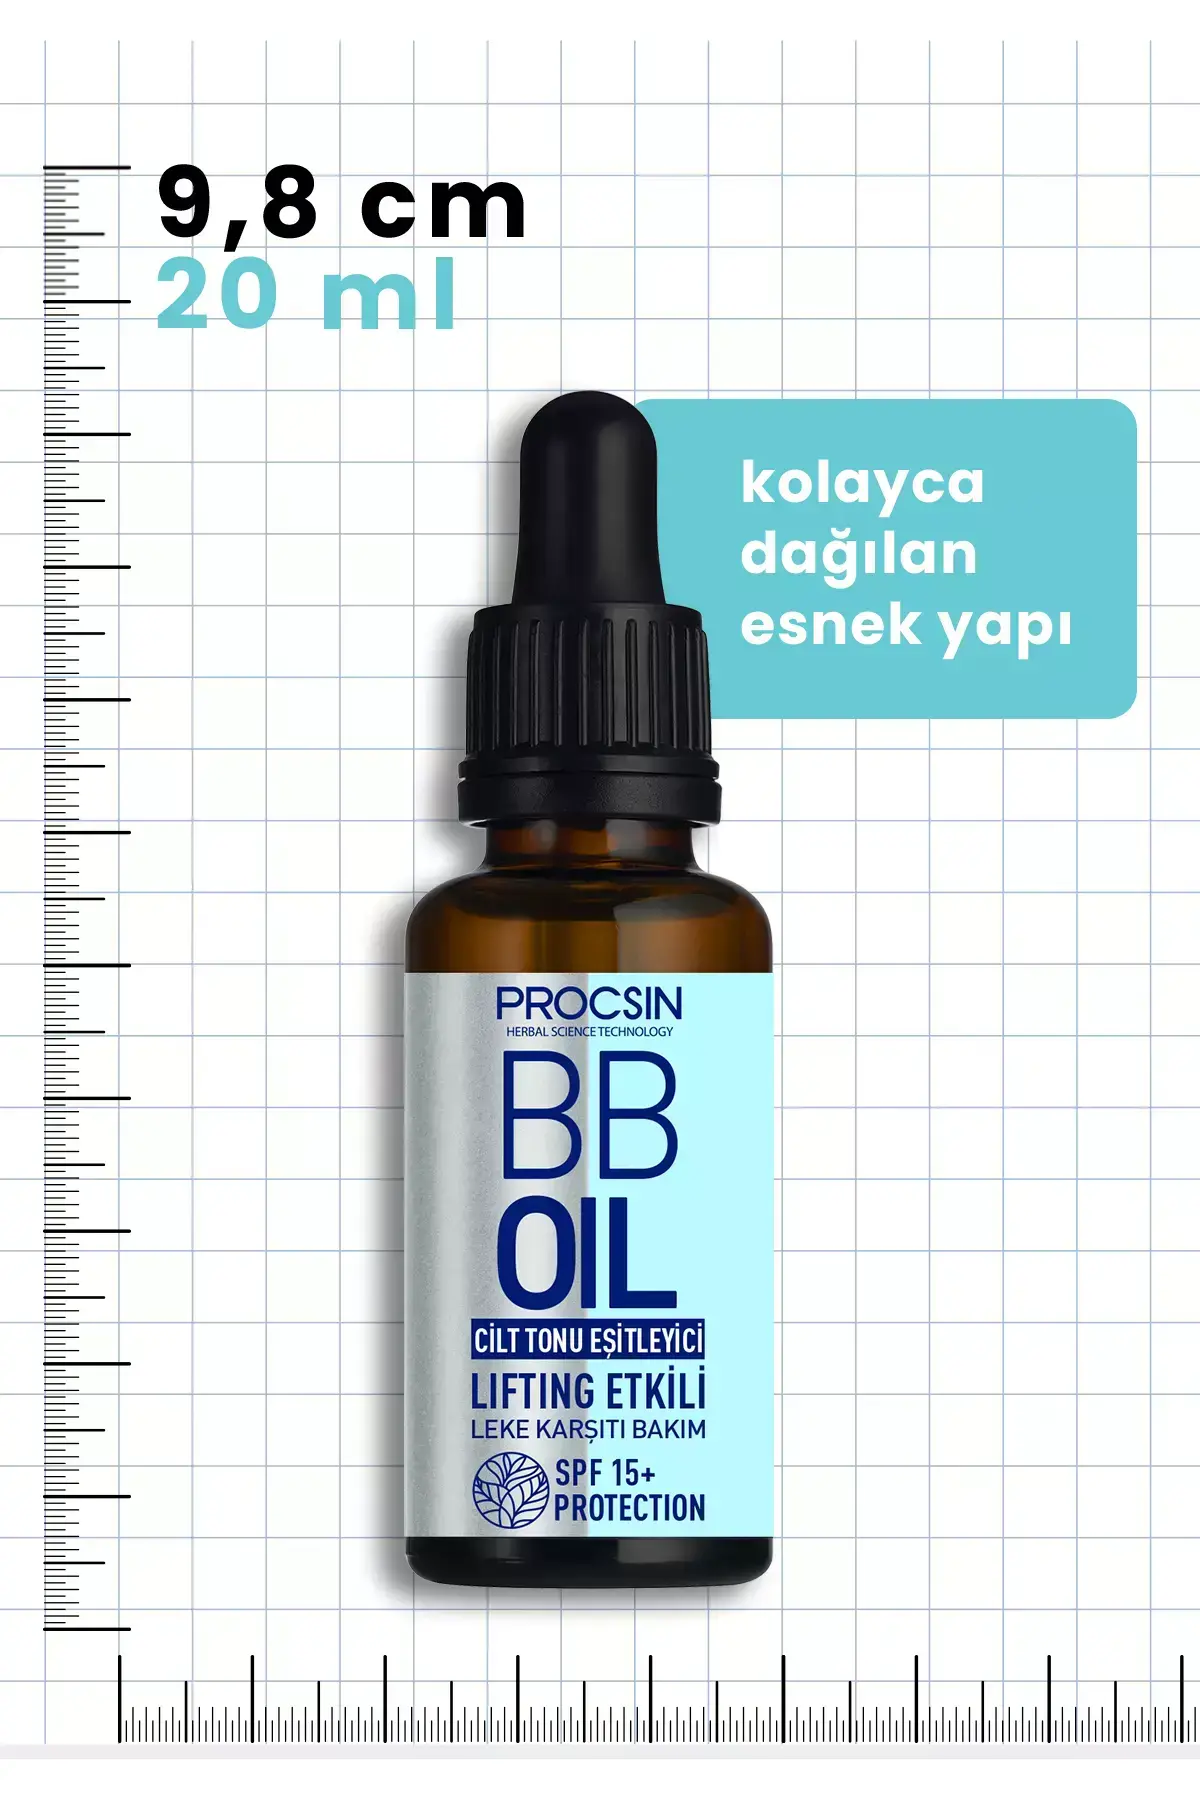 PROCSIN Herbal Science Anında Ton Eşitleme Lifting Etkili BB Oil 20 ML - 7